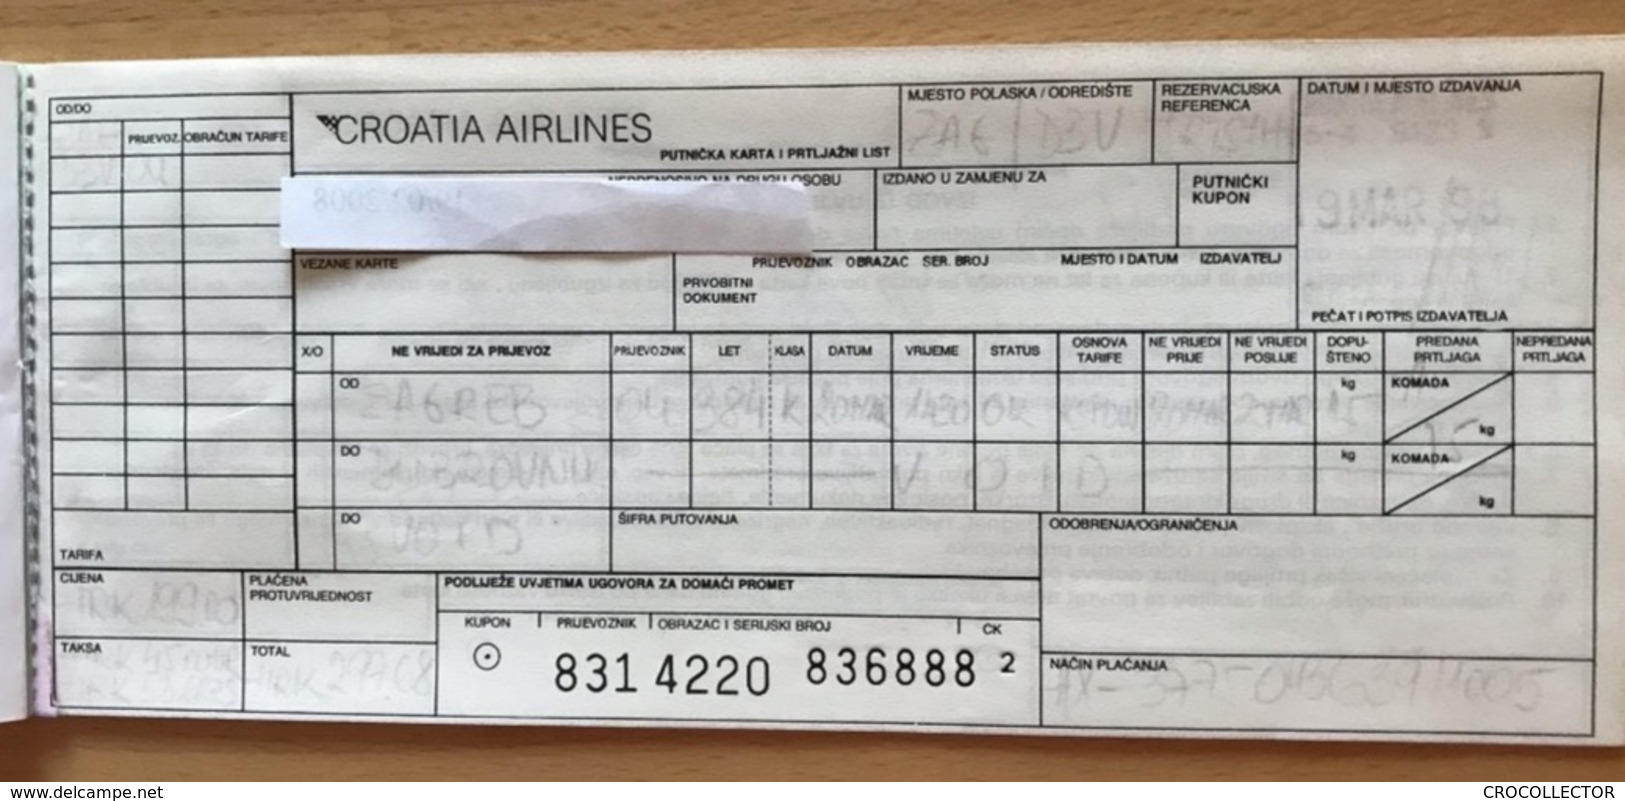 CROATIA AIRLINES TICKET 20MAR98 ZAGREB DUBROVNIK - Tickets